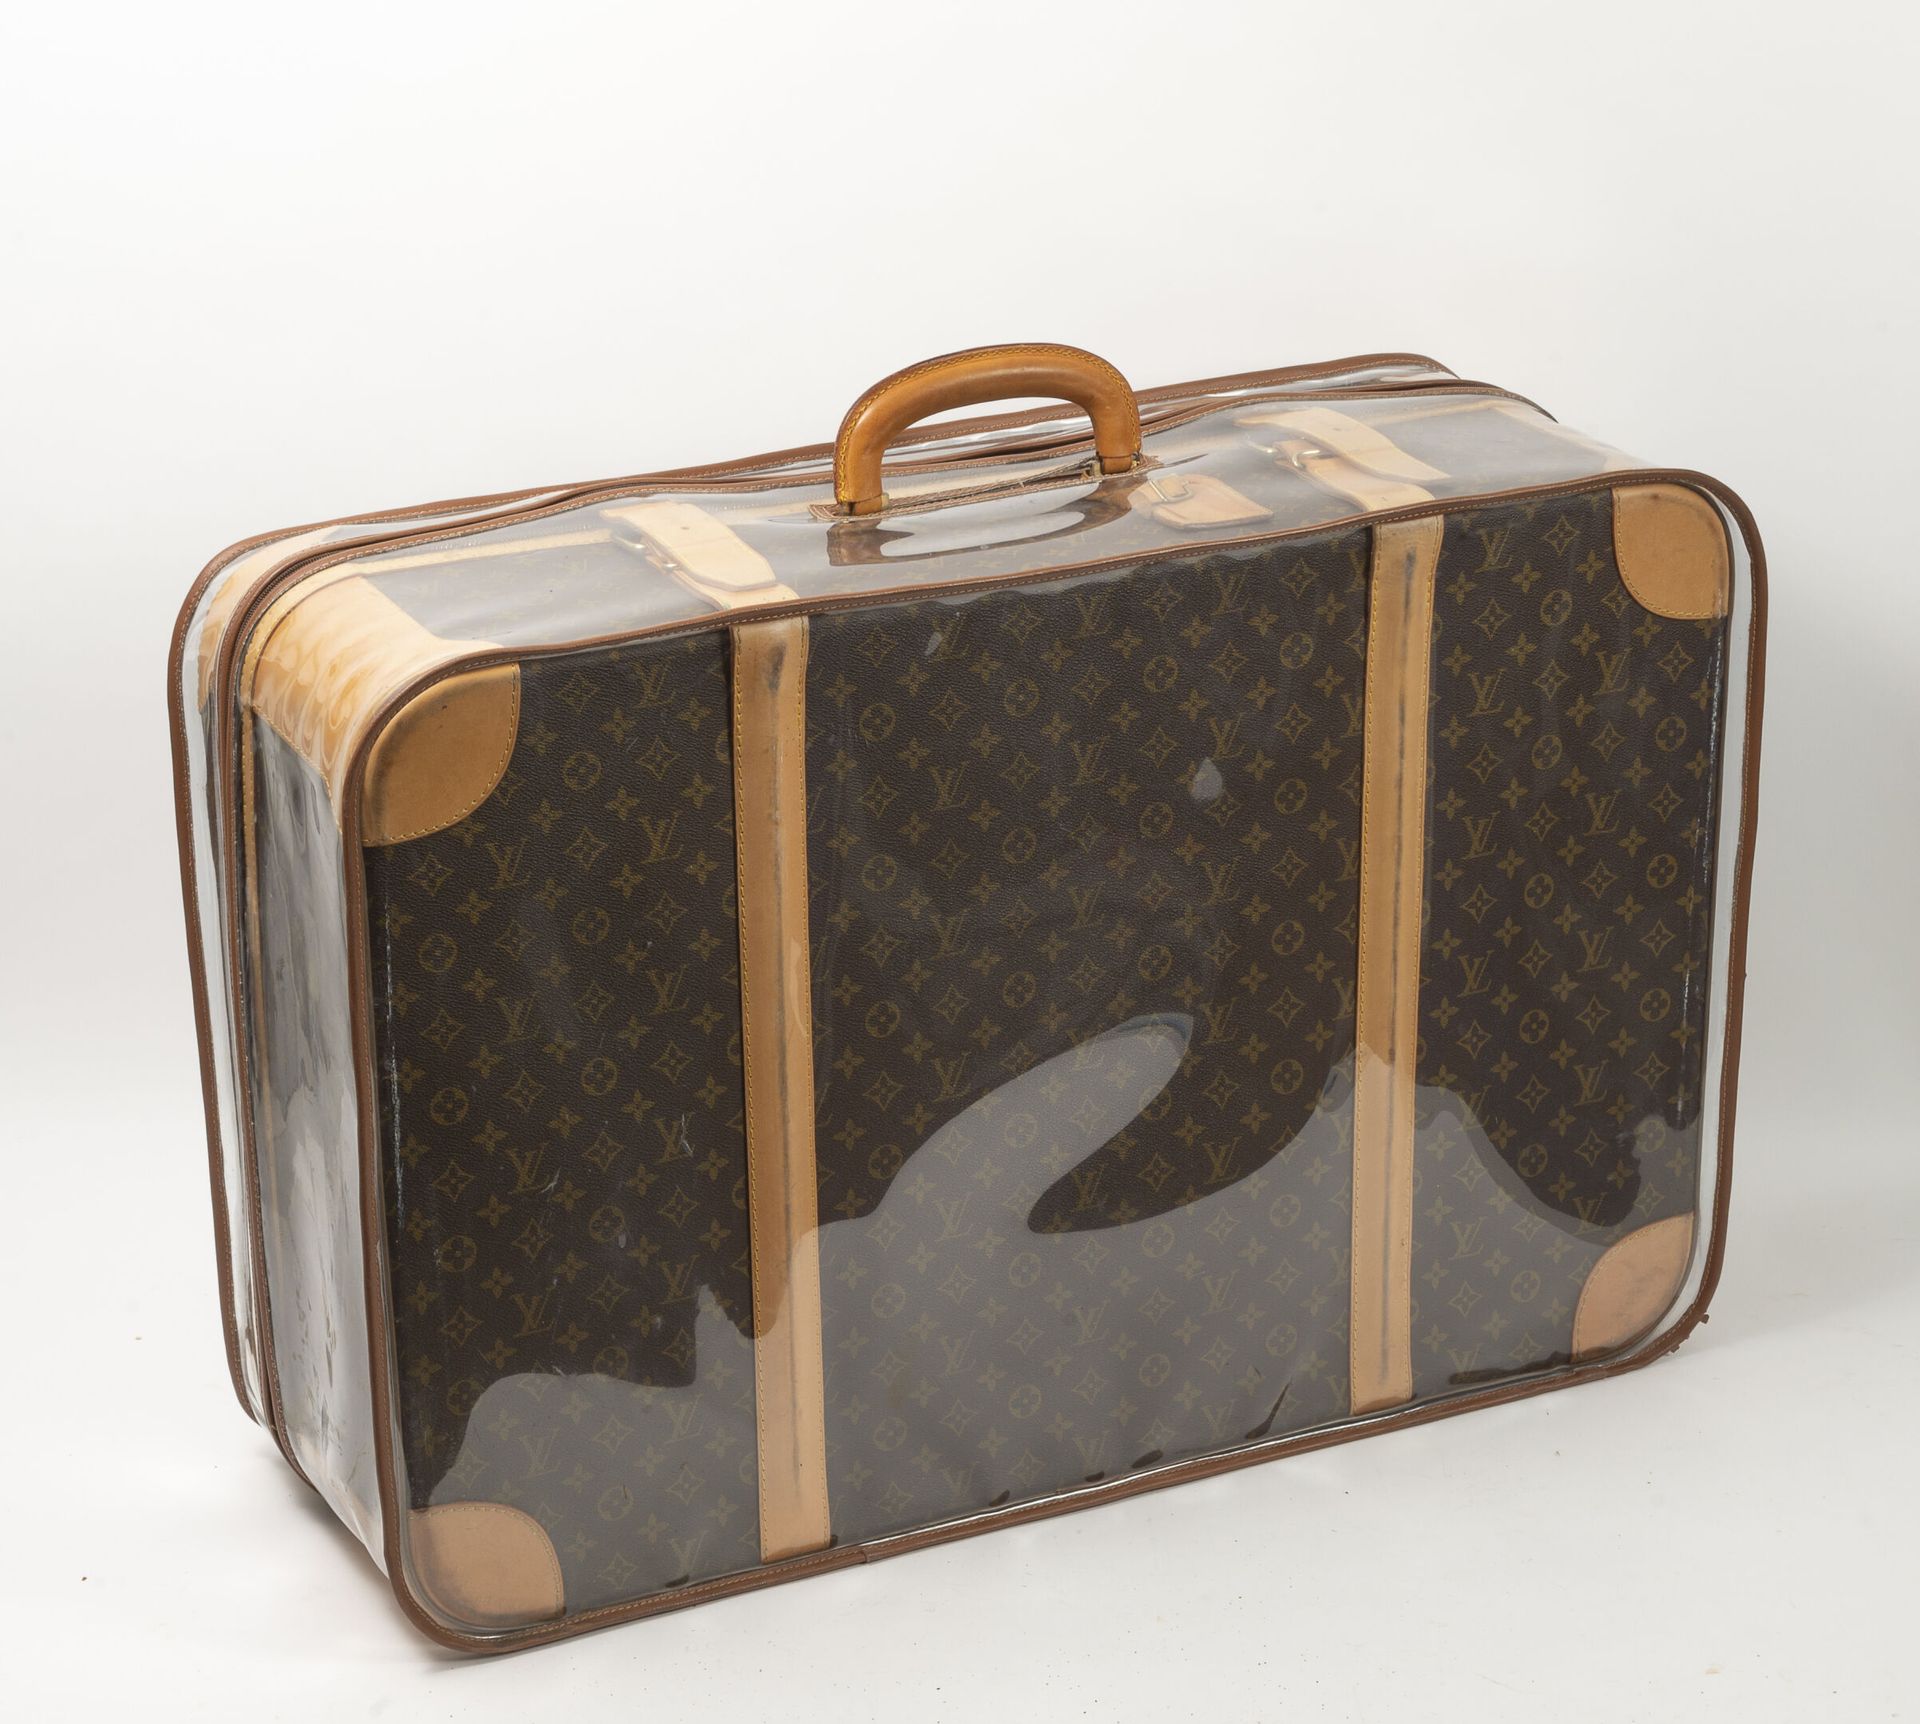 Louis VUITTON 半硬质Monogram帆布和天然皮革制成的行李箱。
米色帆布内饰，两个侧边贴袋和两条带子。
拉链封口。
52 x 10 x 24厘米&hellip;